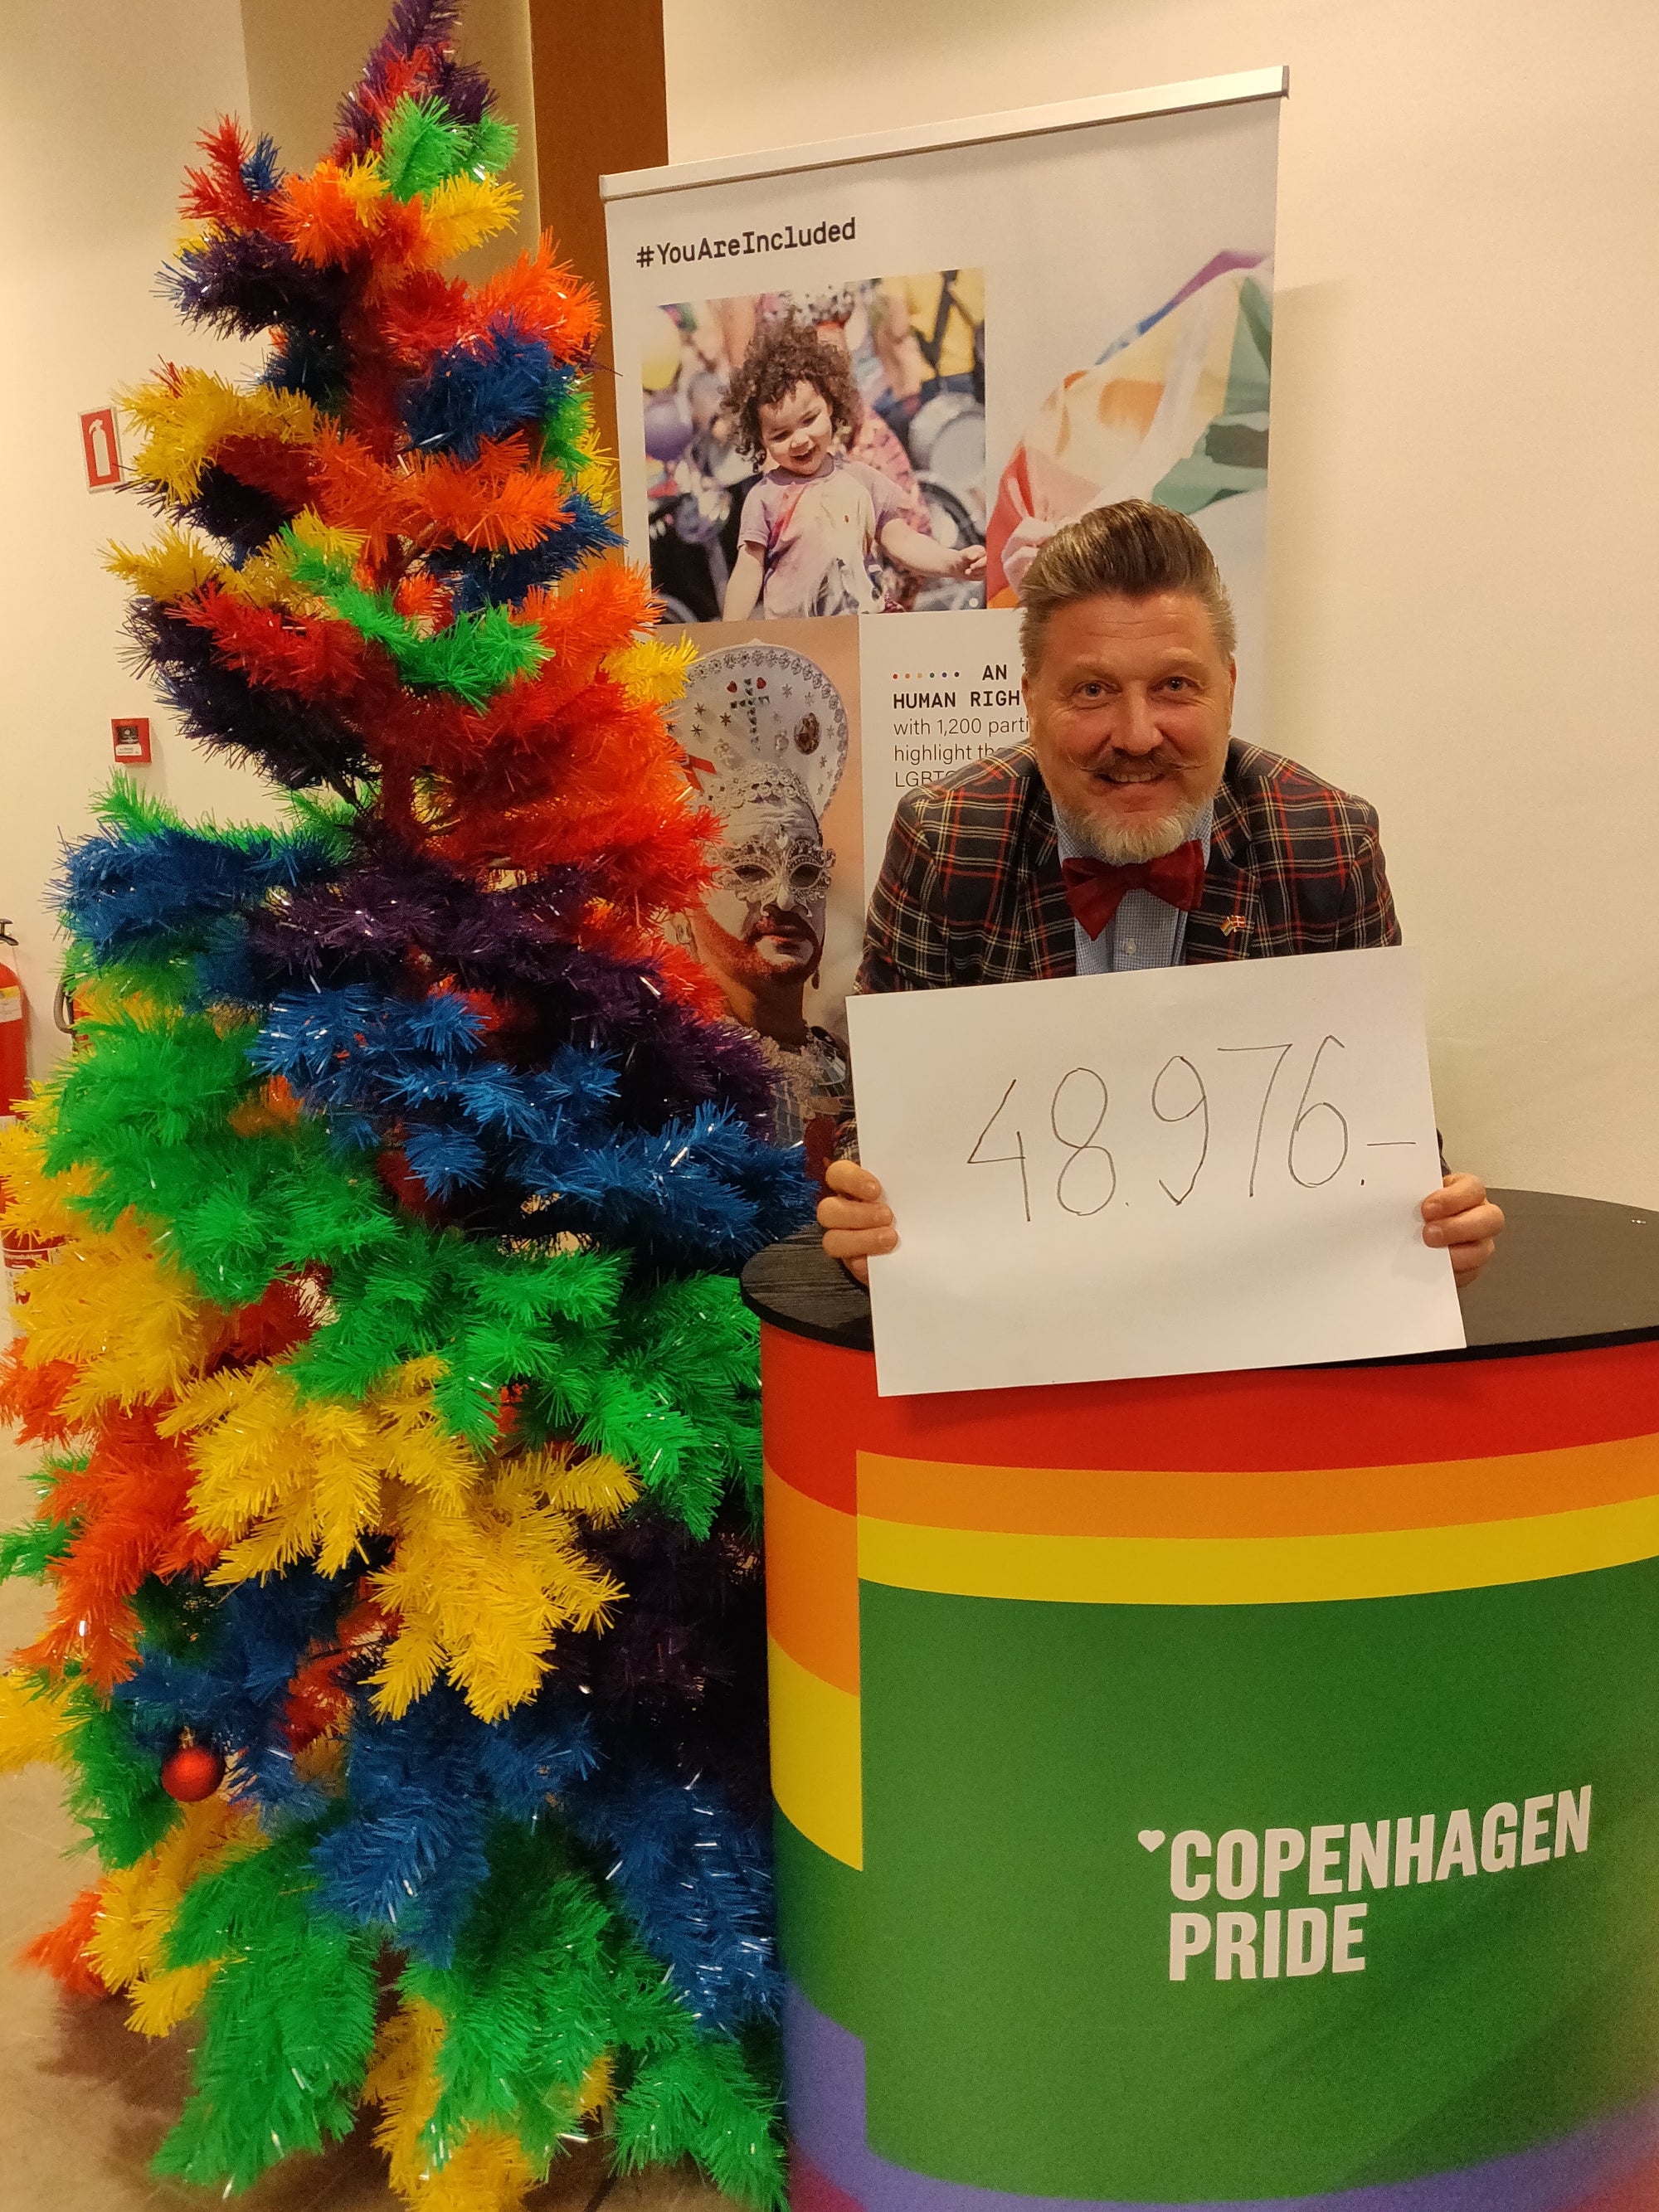 Lola Ramona x Copenhagen Pride Donation total - 48976DKK